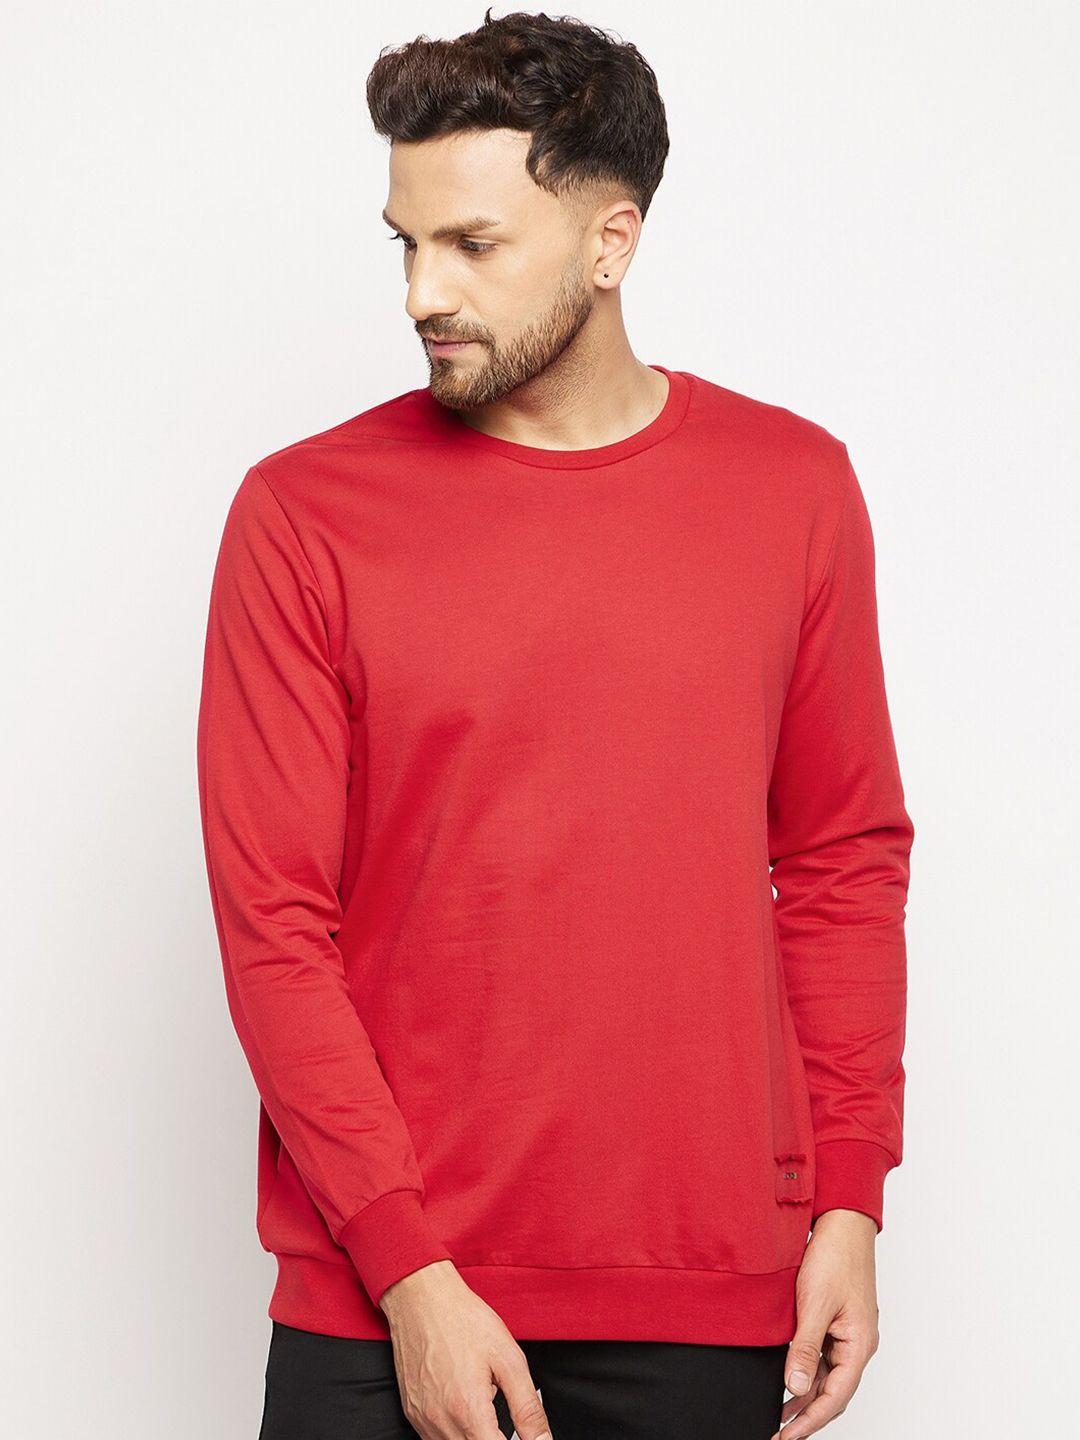 edrio men red cotton sweatshirt